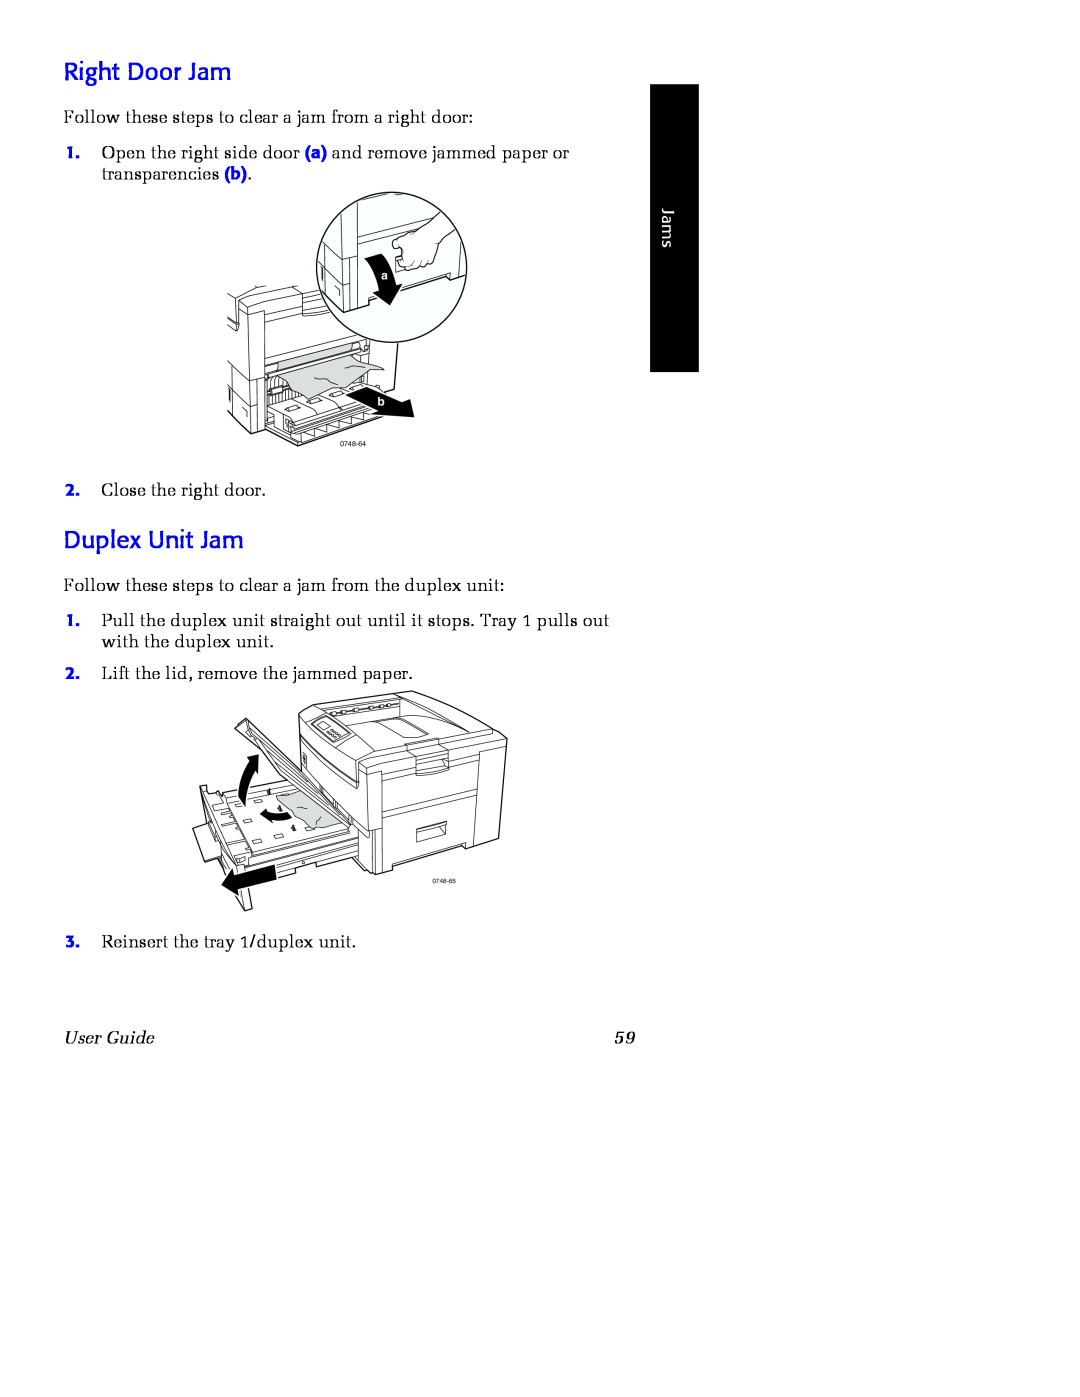 Xerox Phaser 2135 manual Right Door Jam, Duplex Unit Jam, Jams, User Guide 